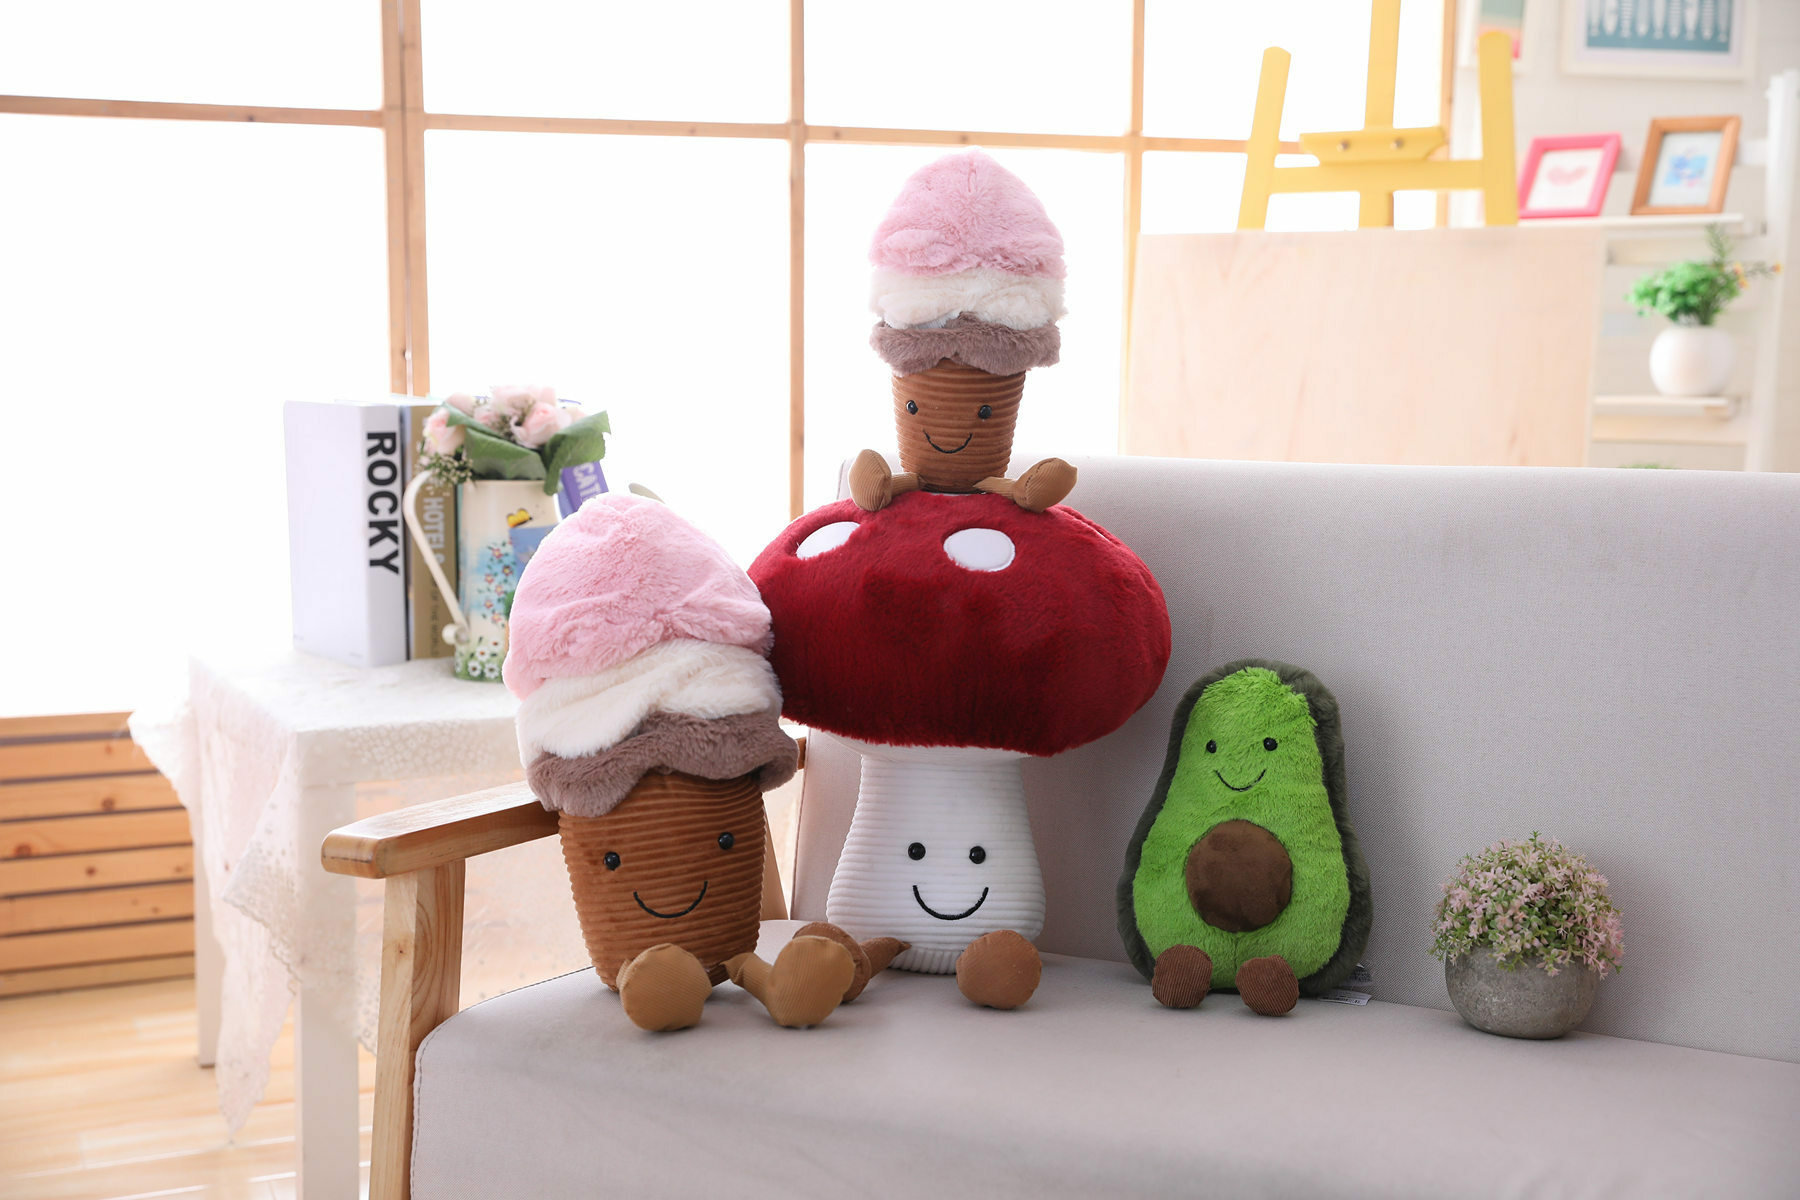 Food Plushies Mushroom Toast Bread Doll Machine: Fun & Unique Toy for Kids